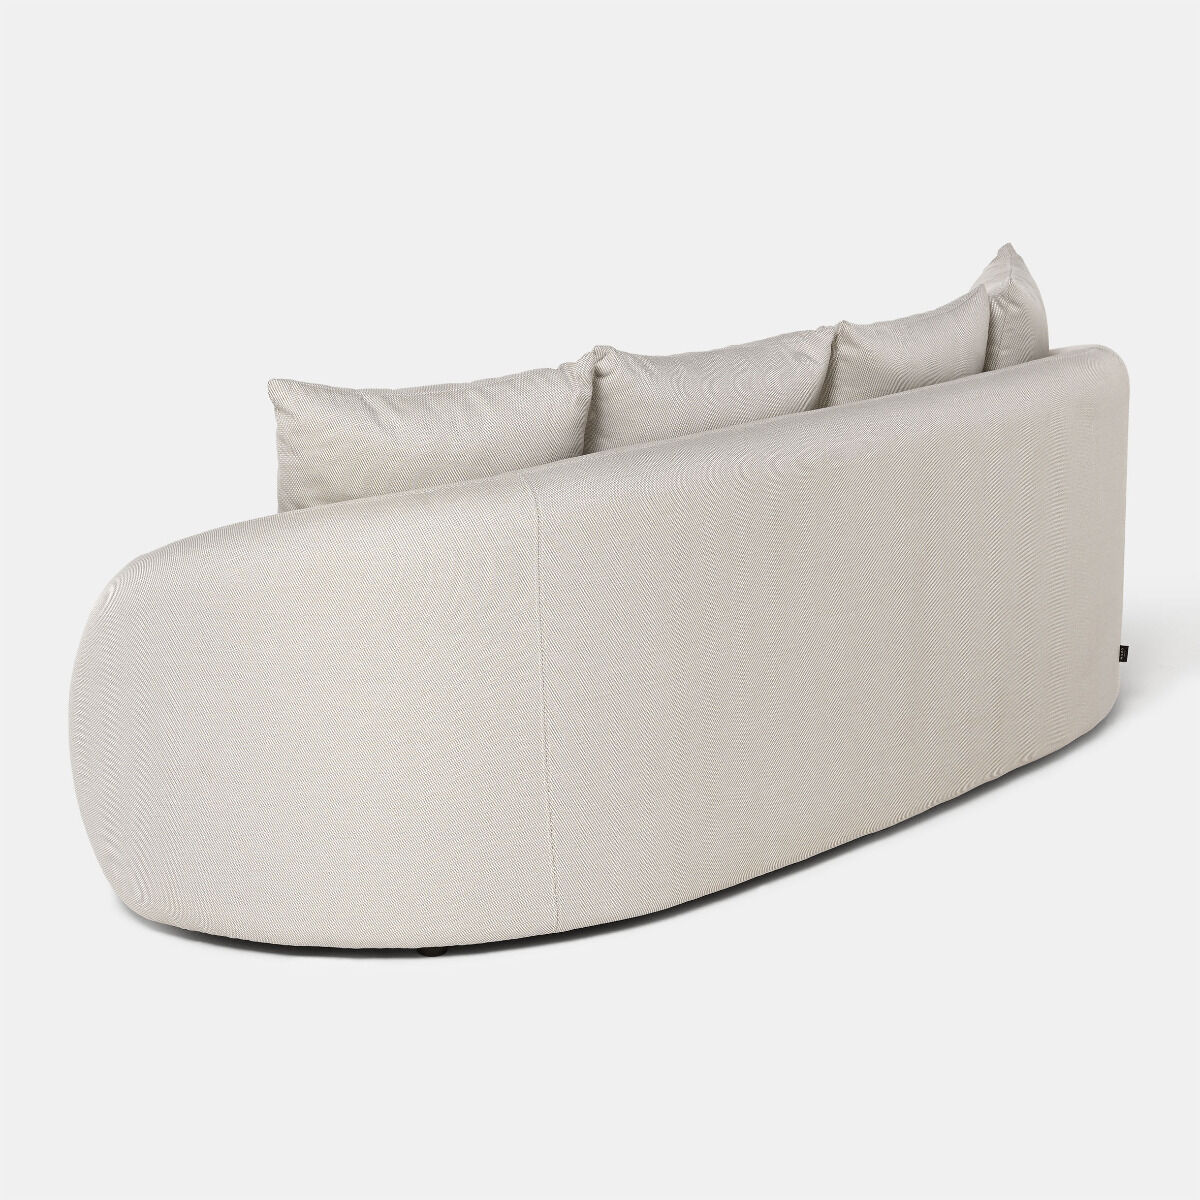 Sofa ogrodowa 2 osobowa Tongo 228x107x74cm off white-beż tkanina Olefin Miloo Home